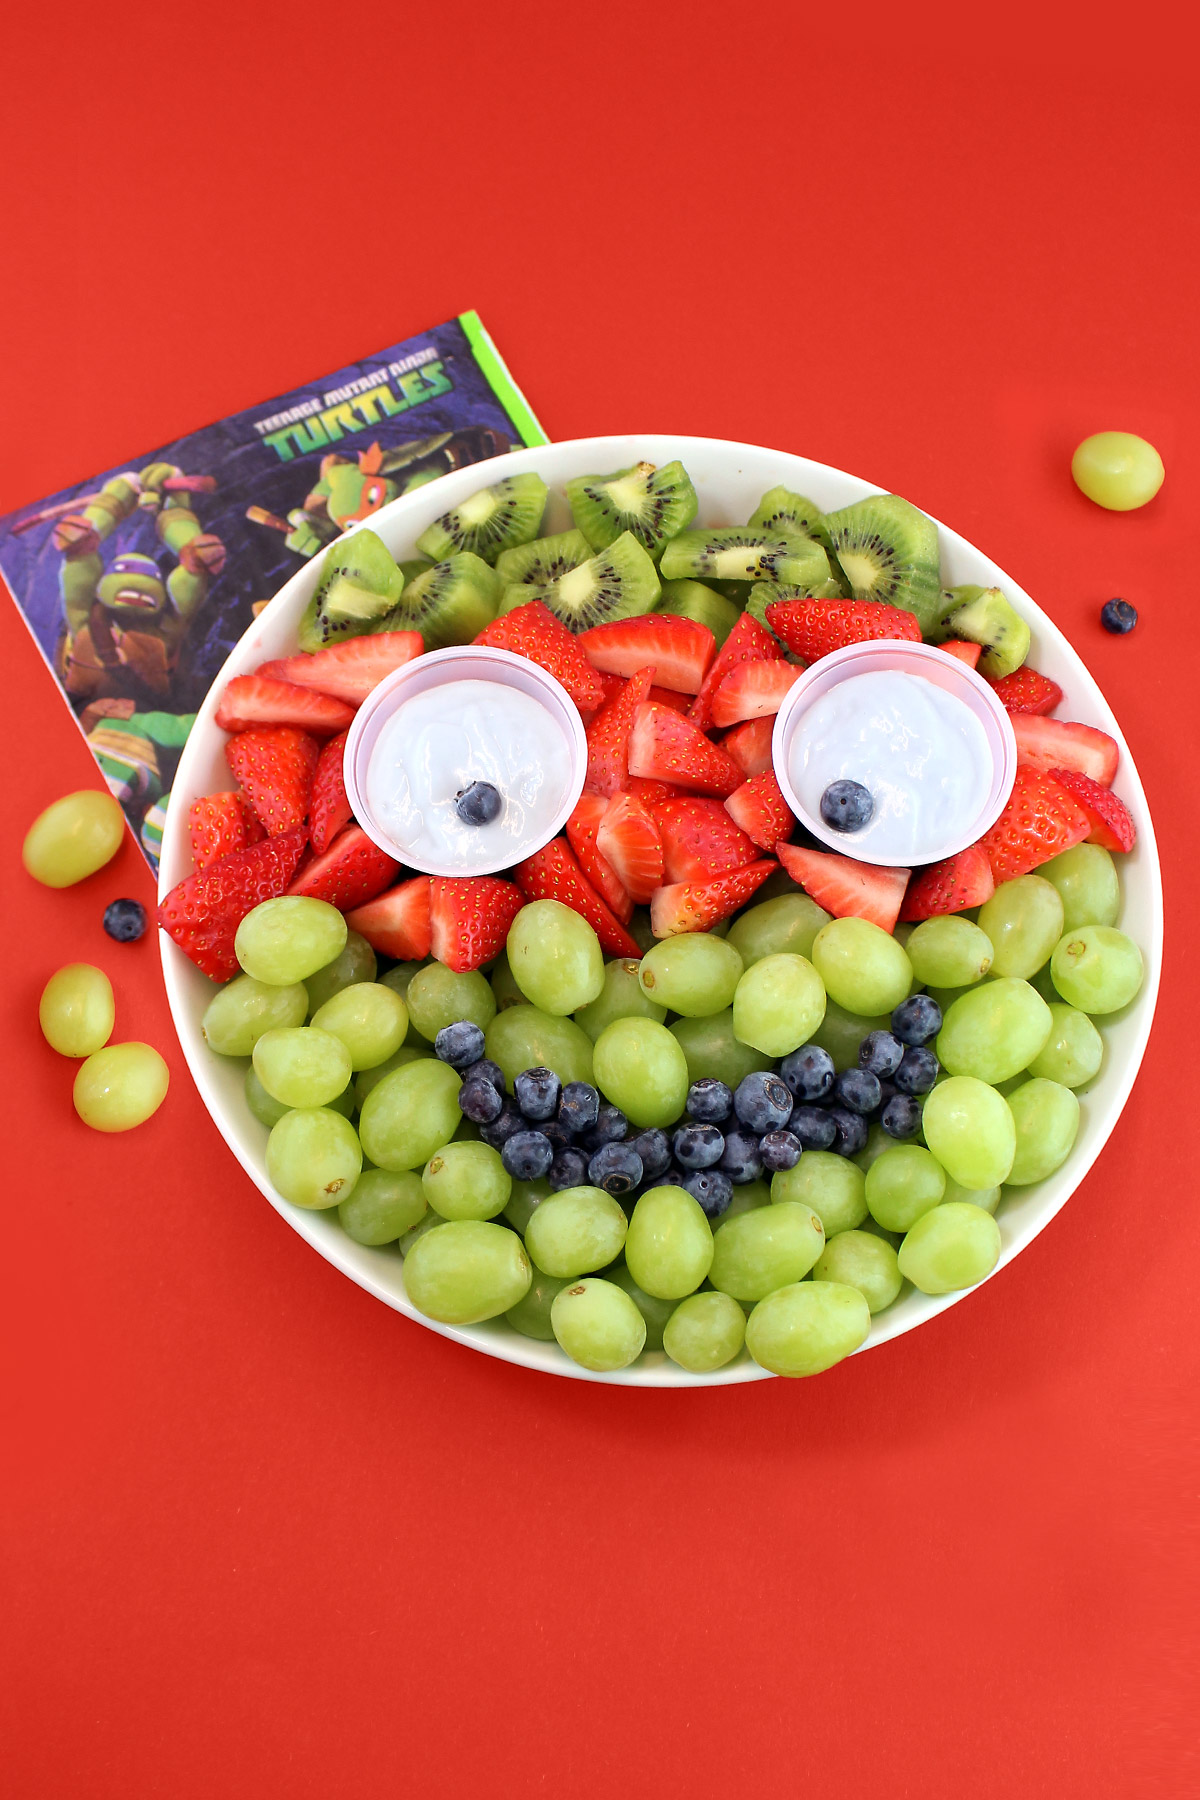 TMNT Fruity Face Fruit Platter Recipe